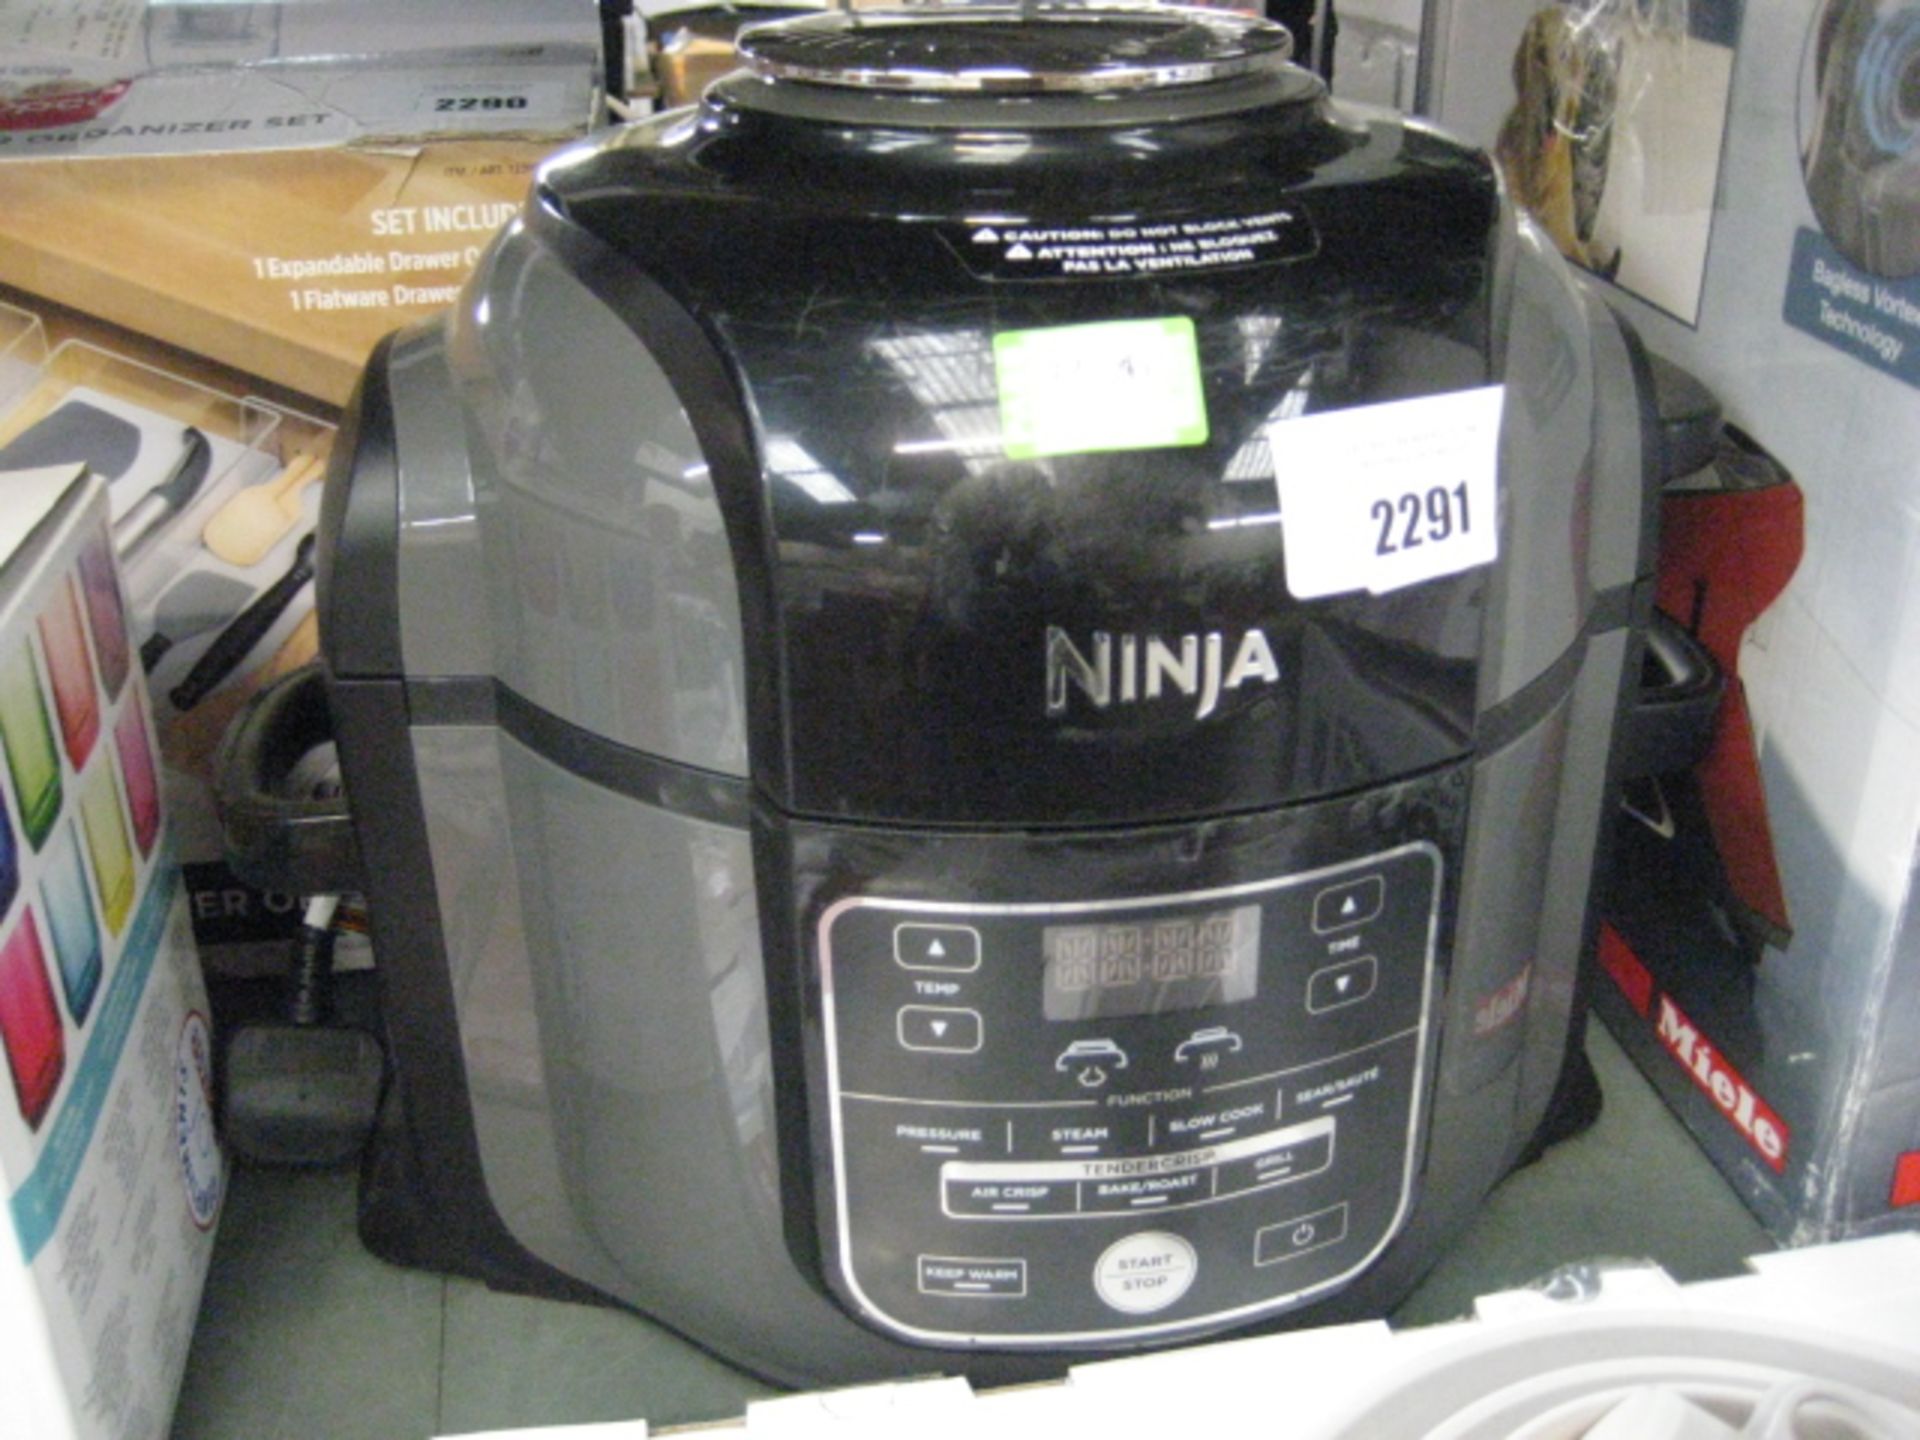 (43) Ninja pressure cooker